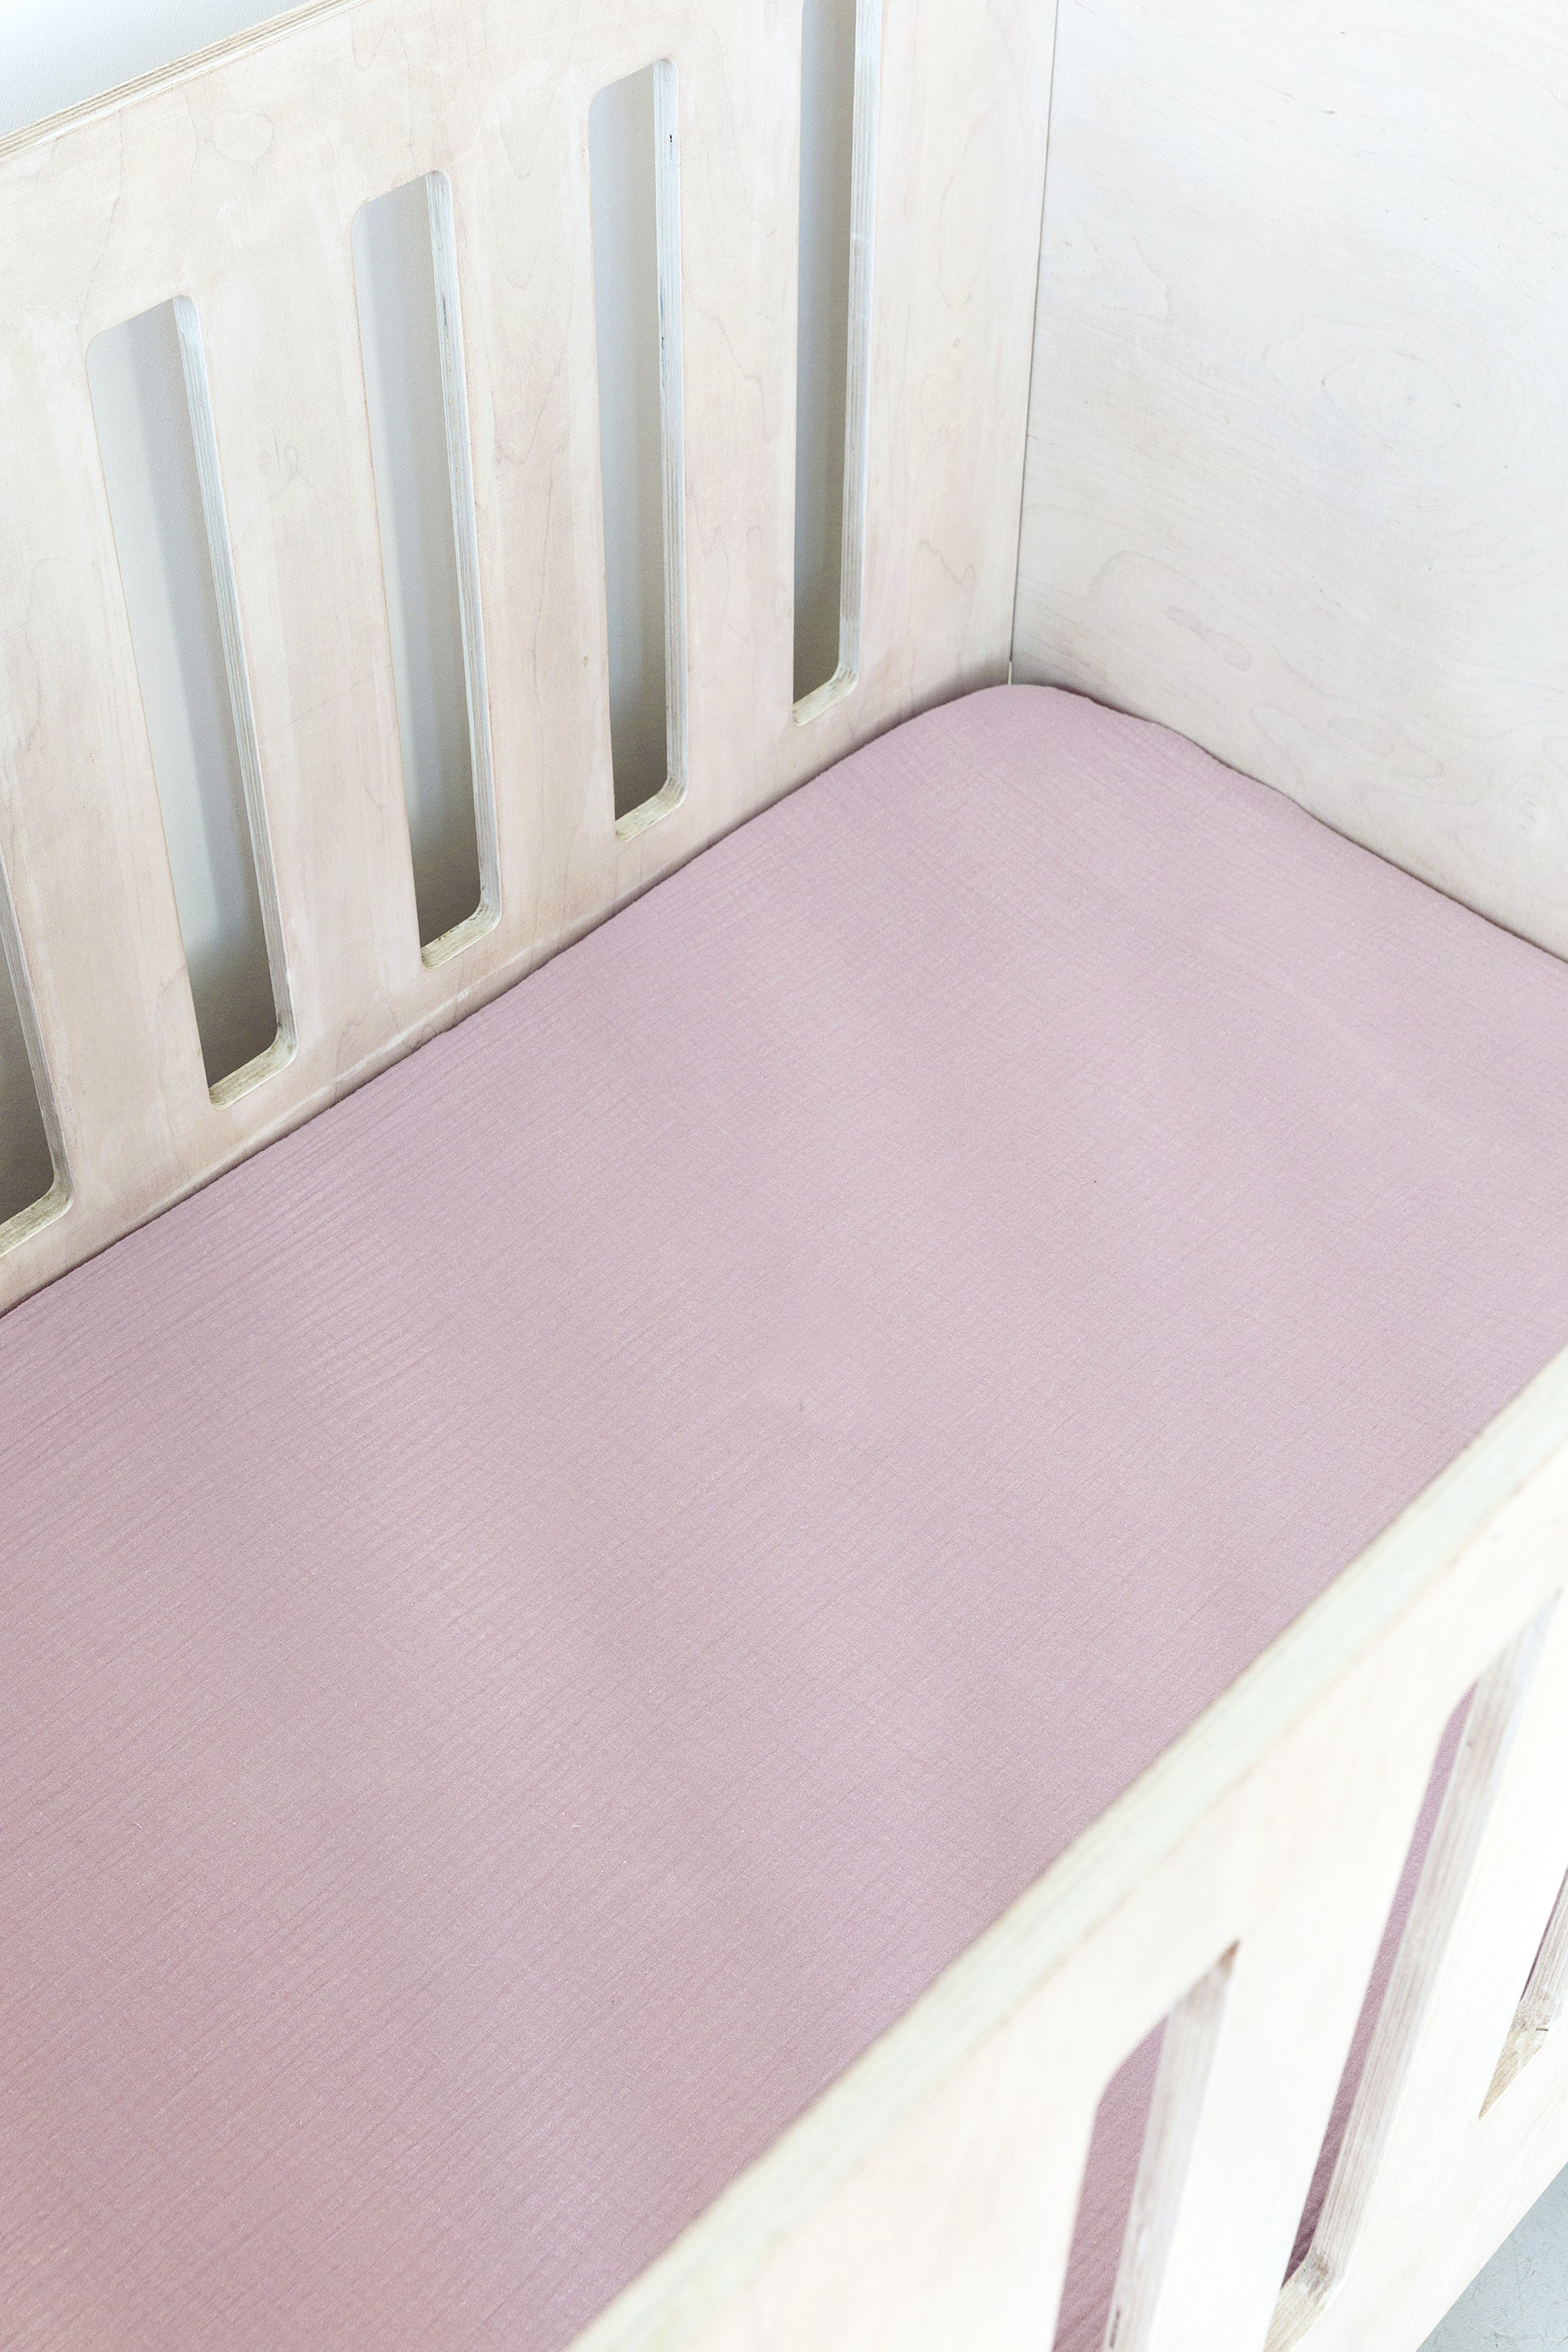 dusty pink cot sheet